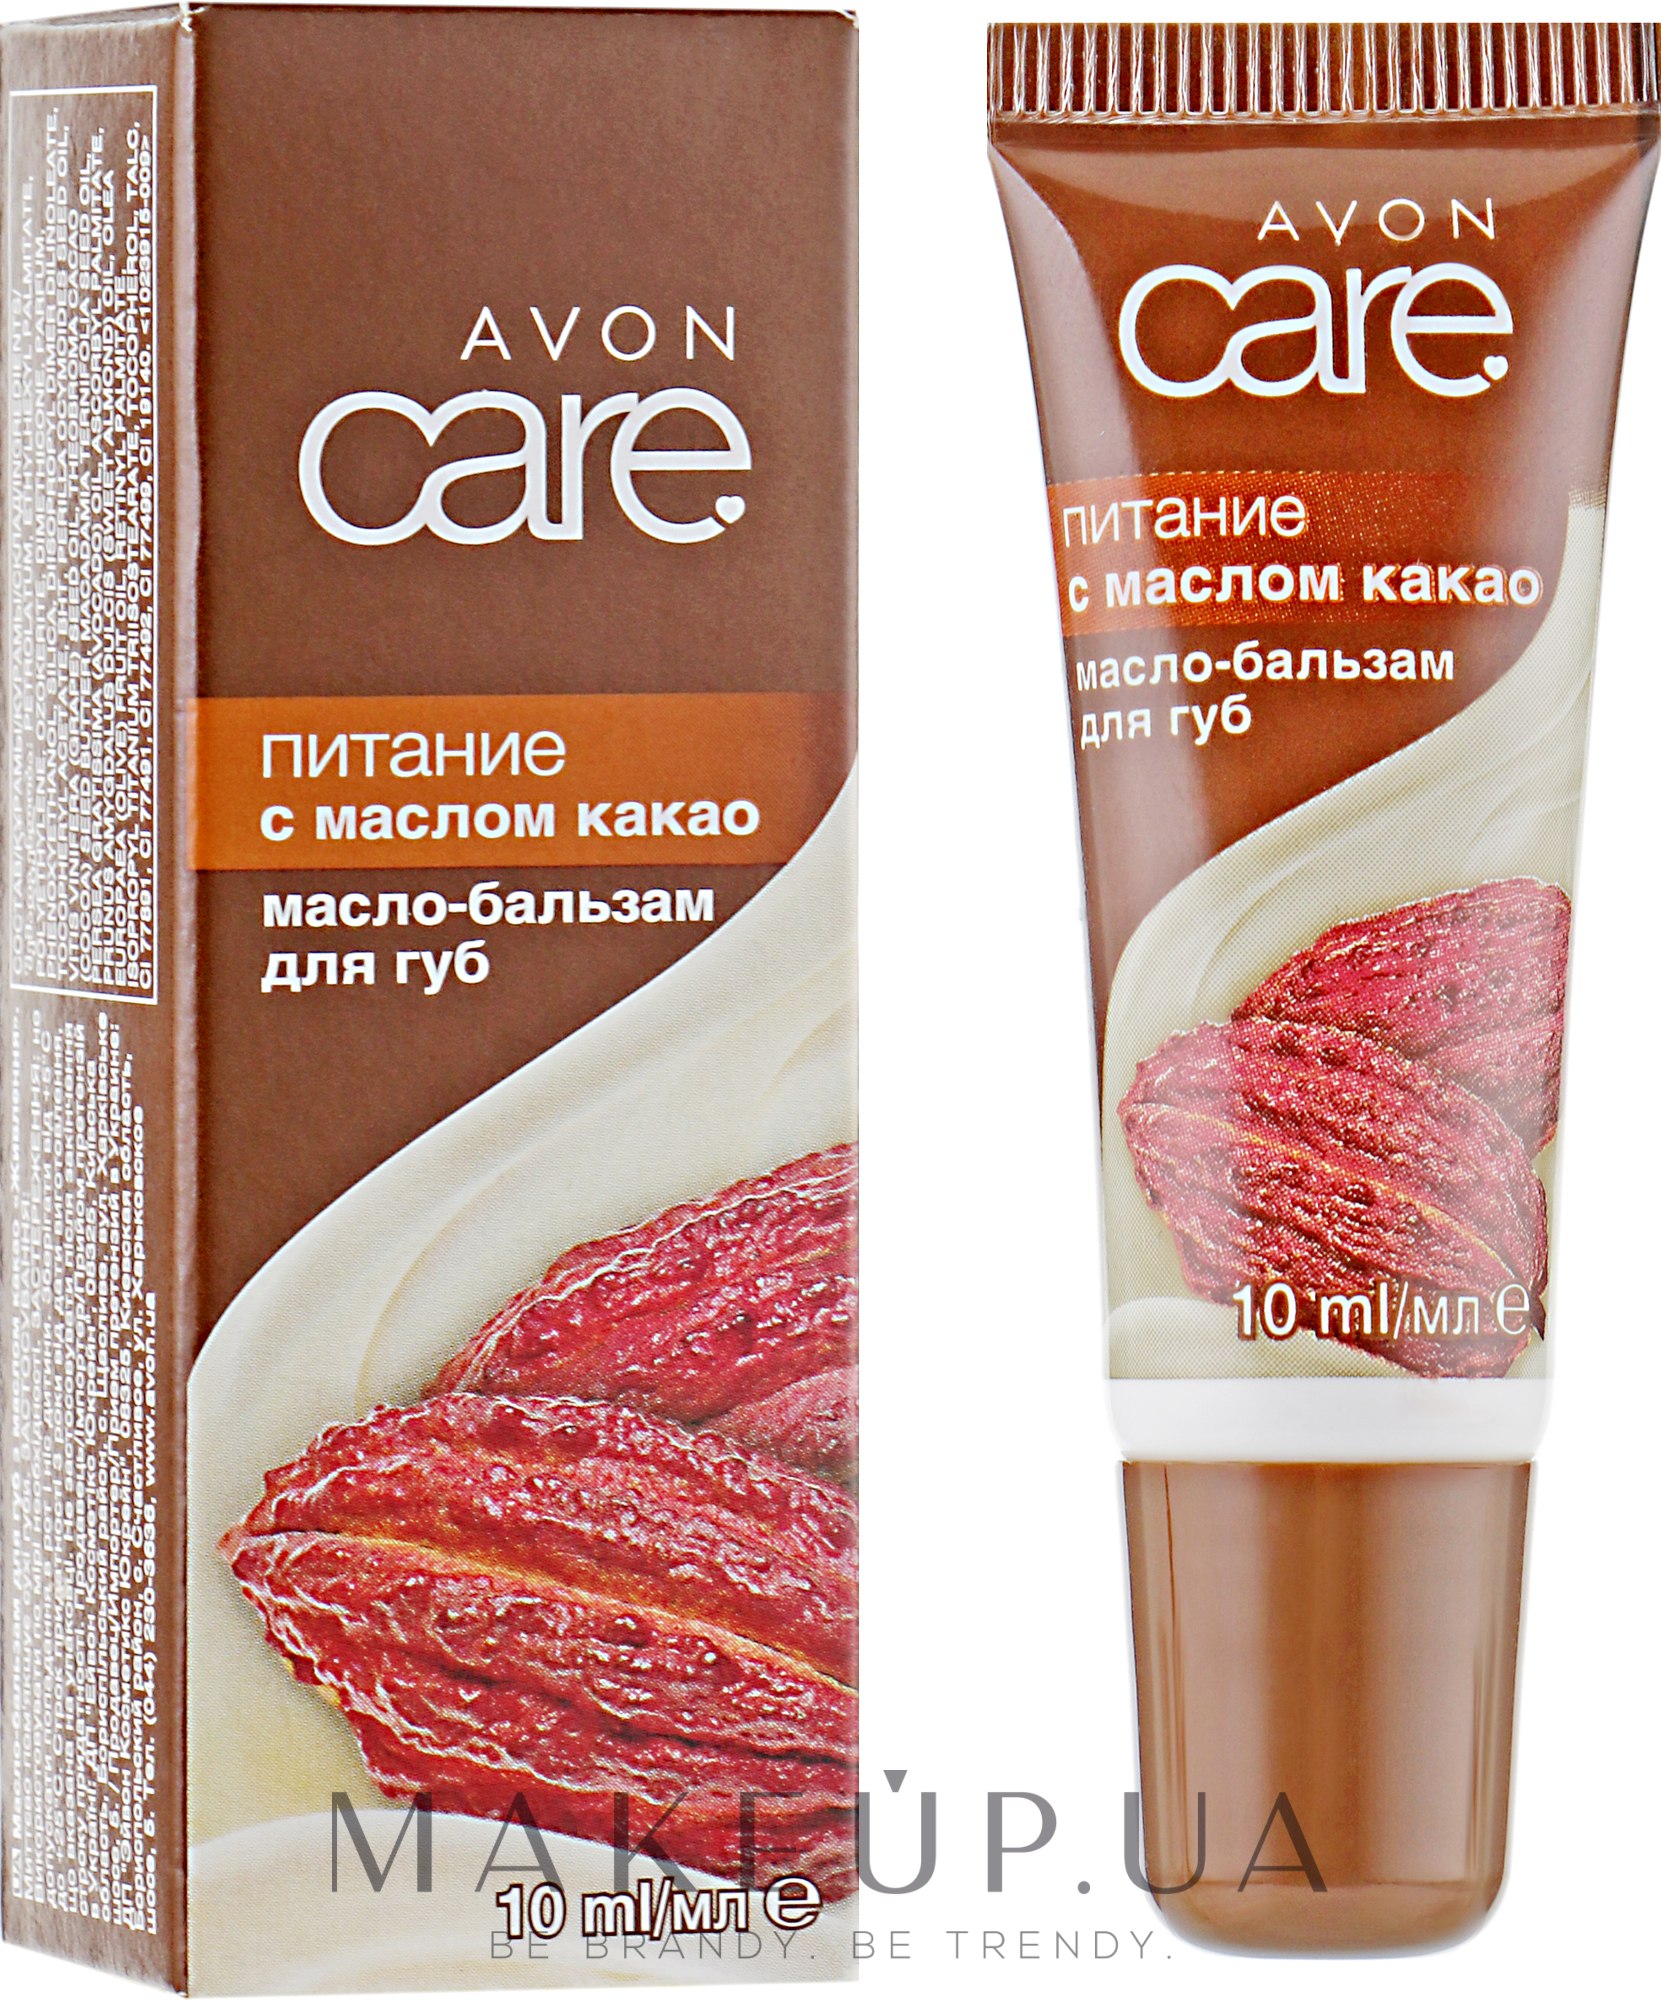 Масло какао для губ. Avon Care масло бальзам для губ. Бальзам для губ какао эйвон. Avon Care бальзам для губ какао. Бальзам для губ с маслом какао эйвон.